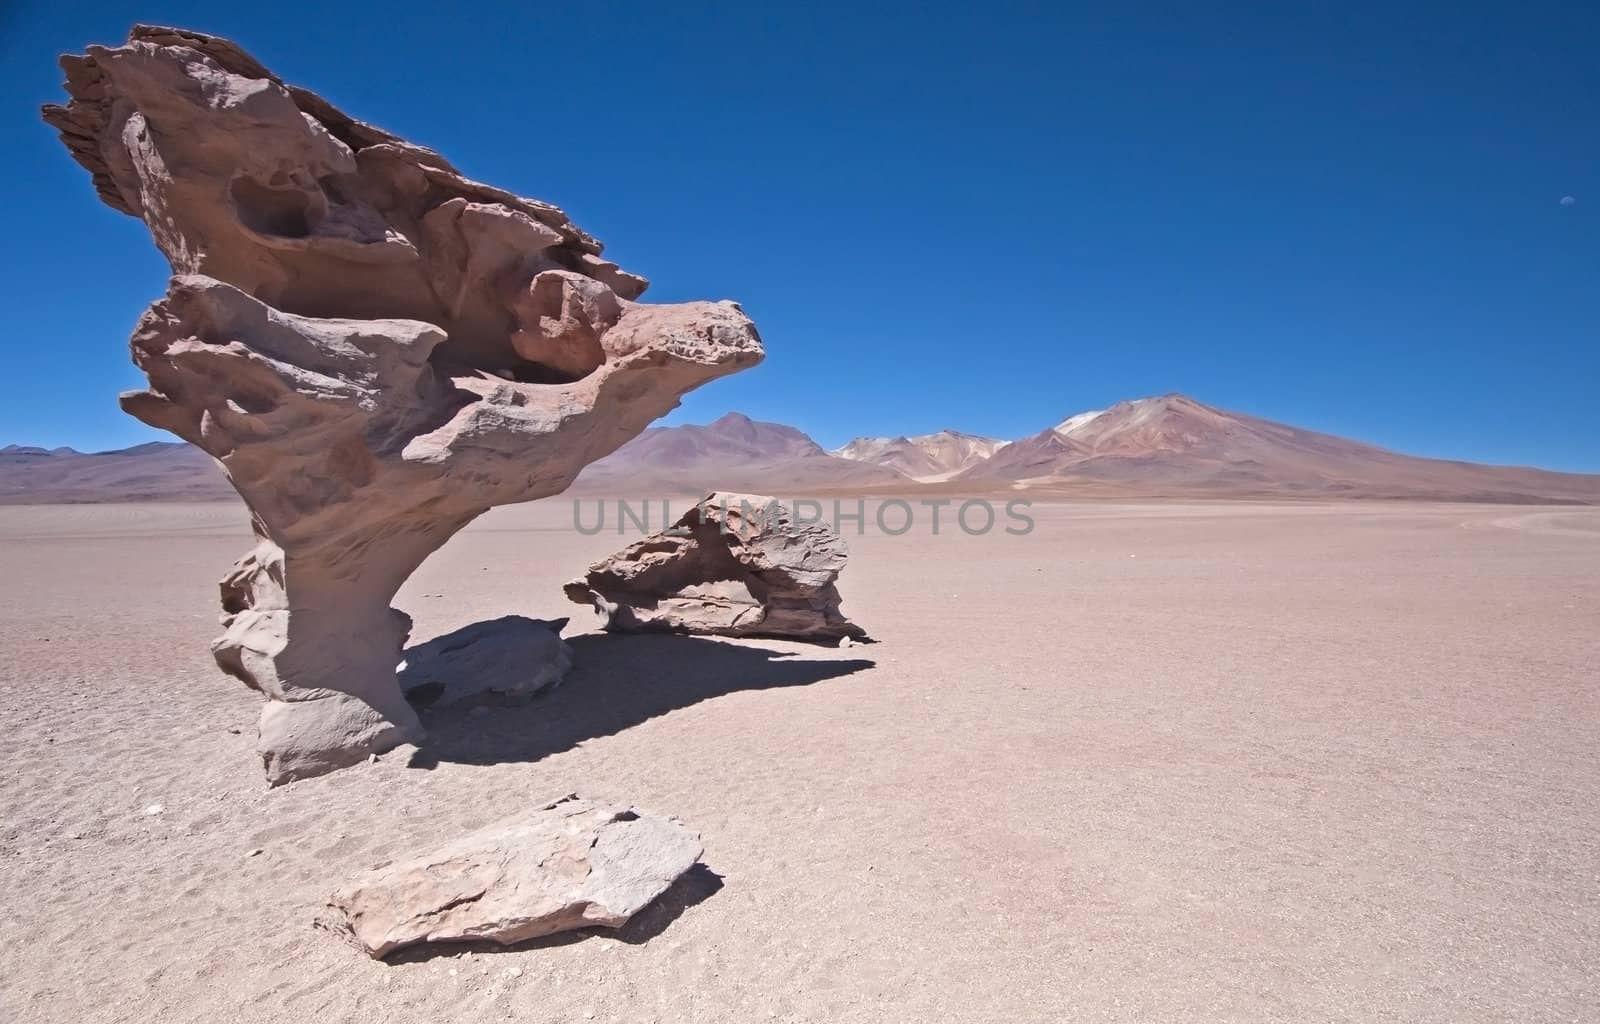 Desert Rock Tree in Bolivia by urmoments